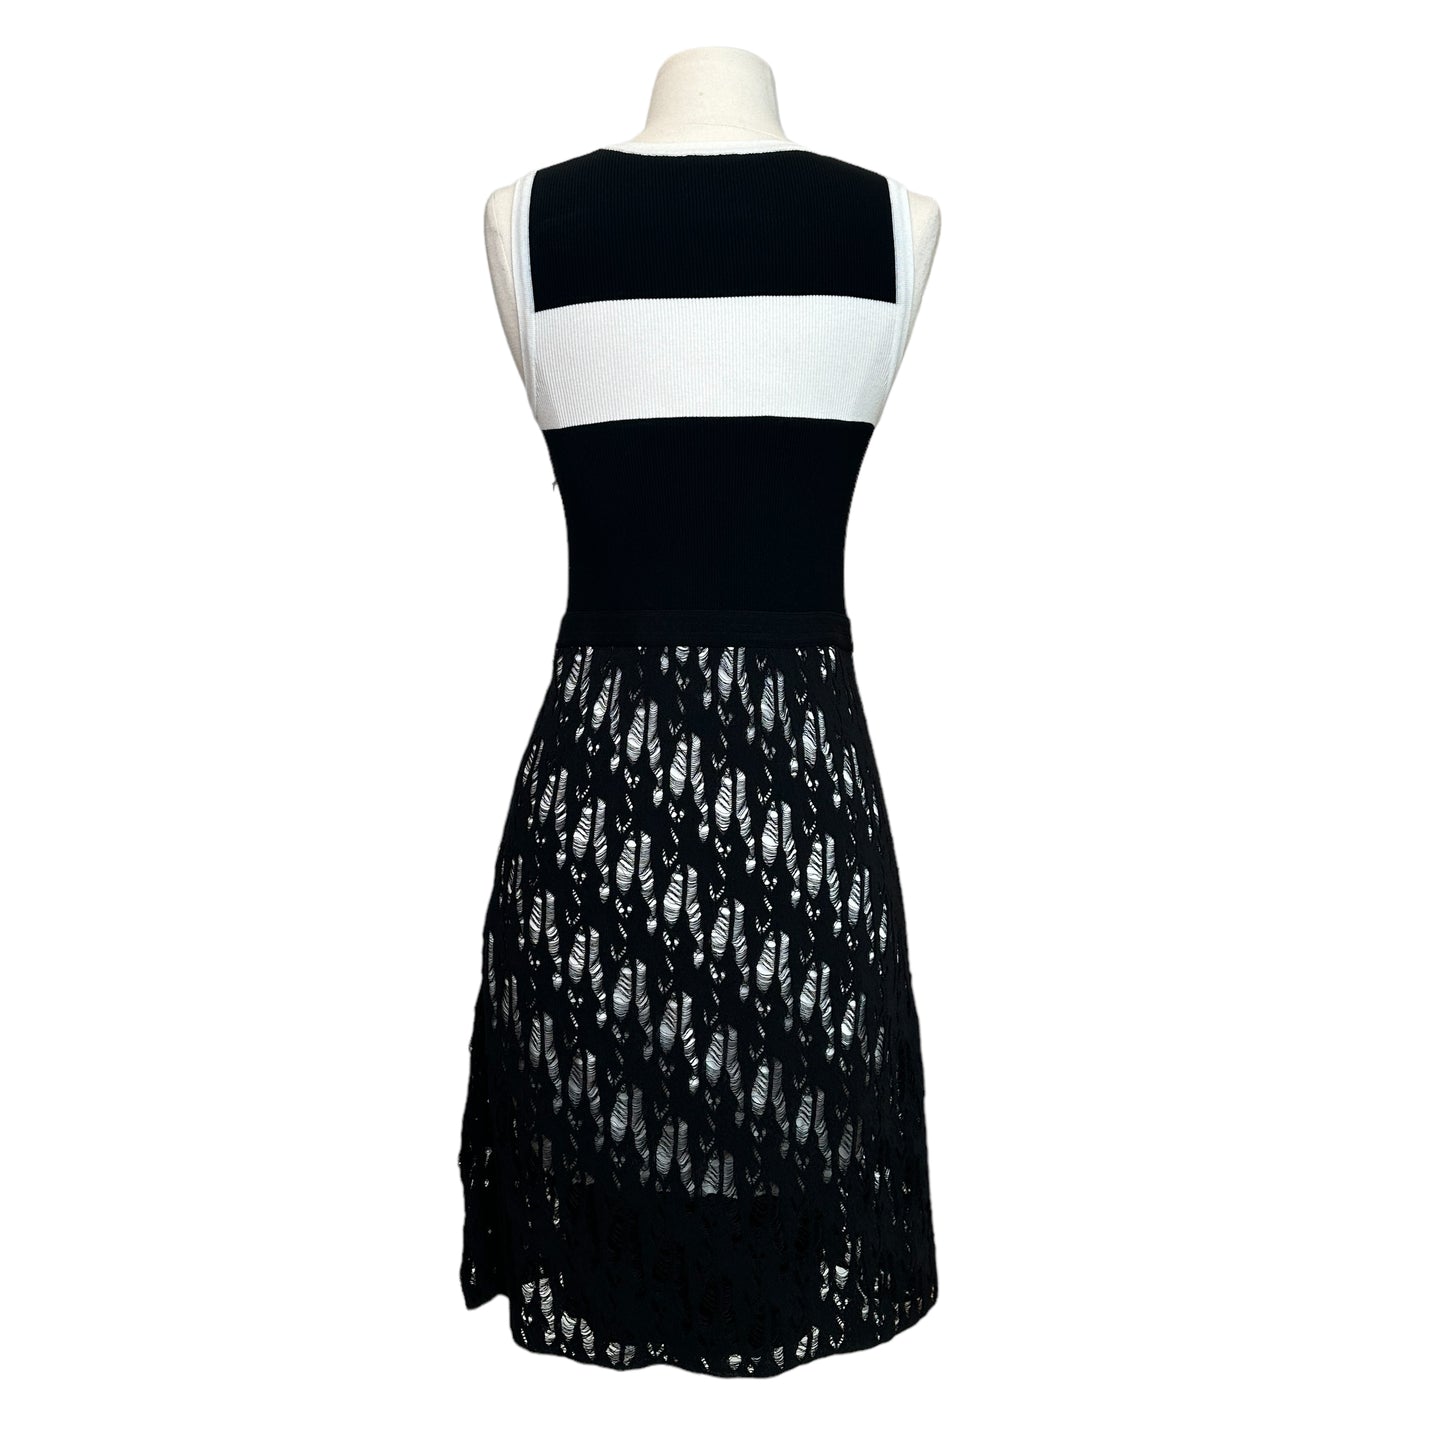 Black & White Distressed Dress - S